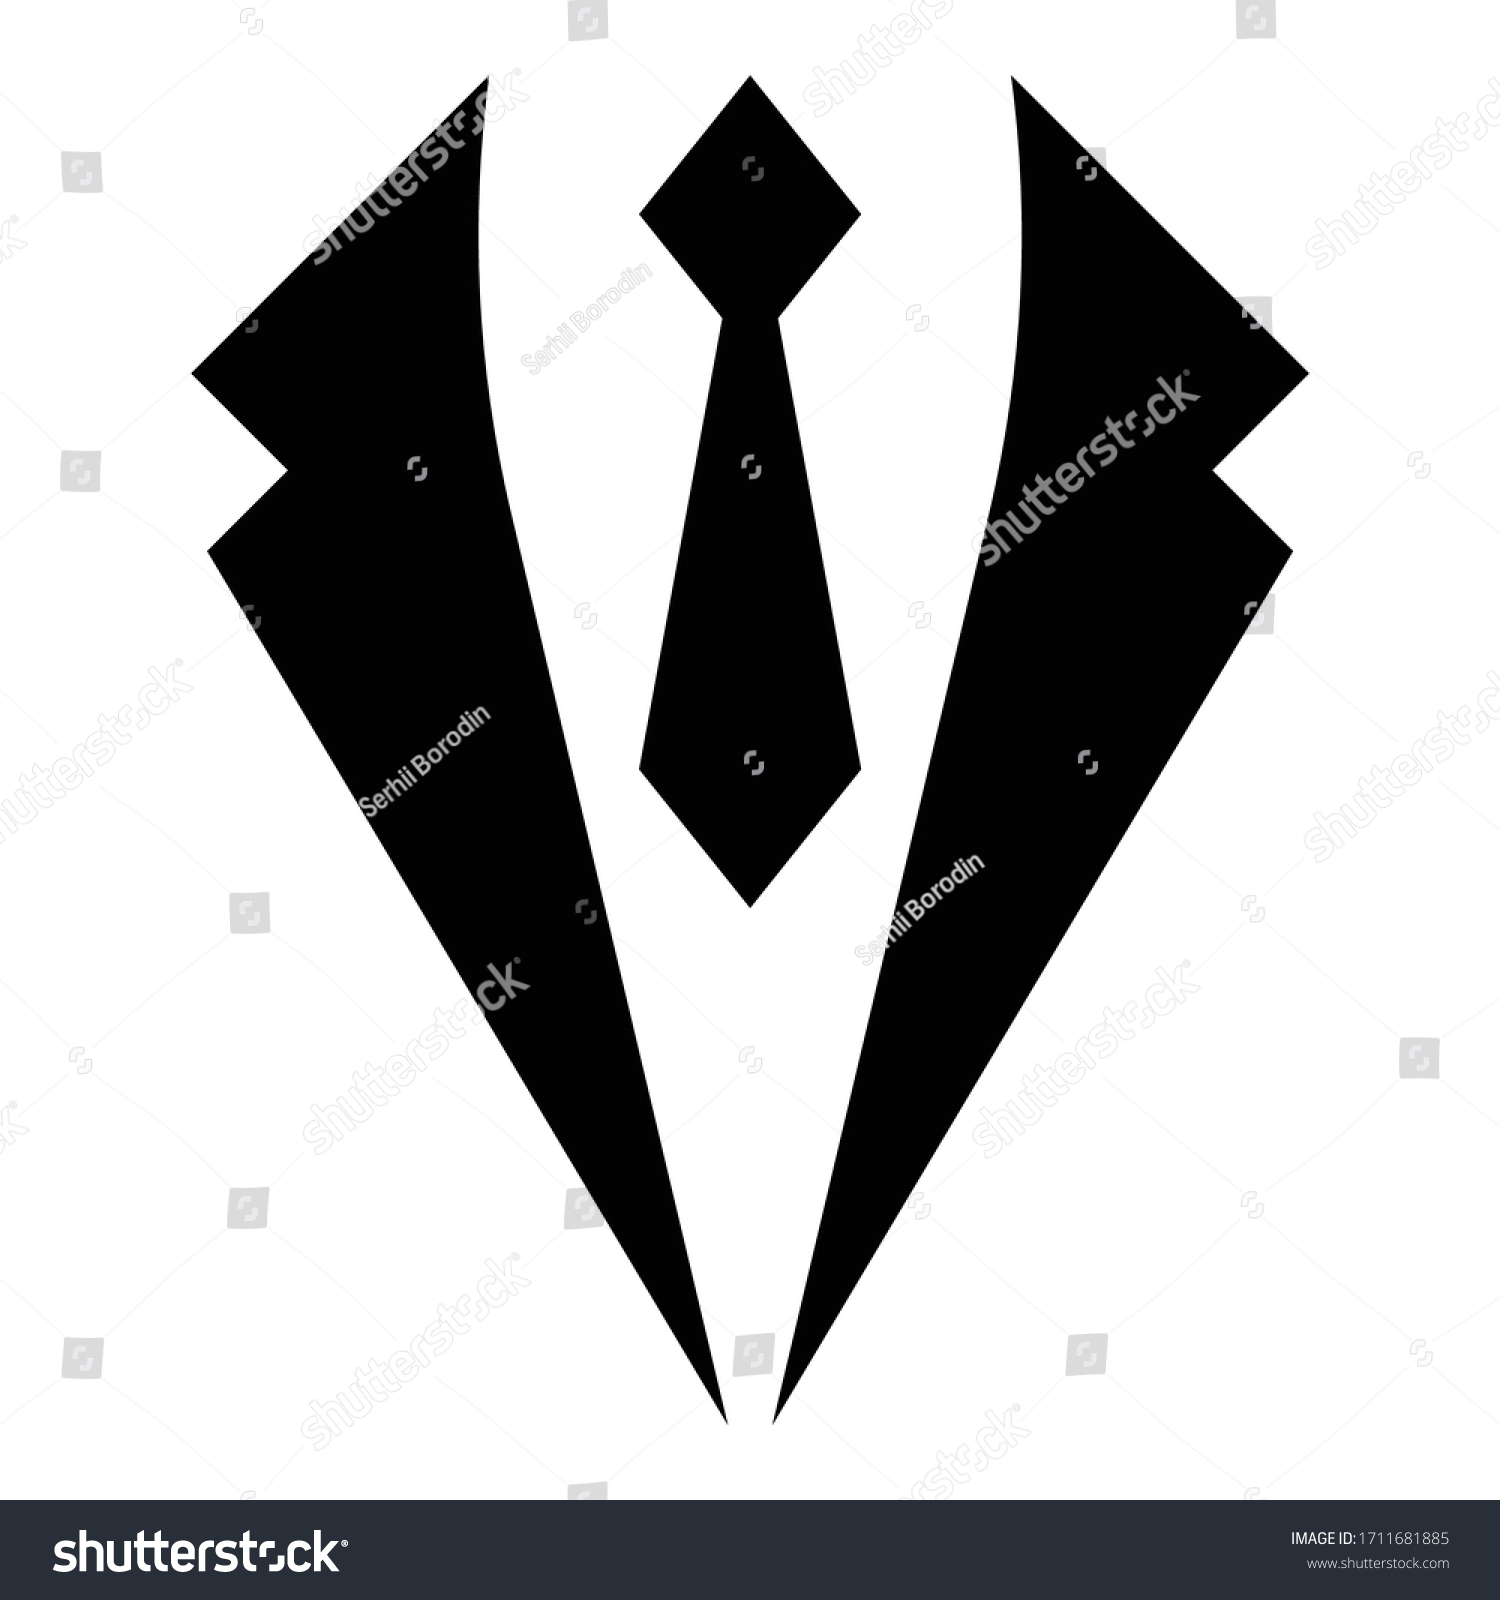 Business Concept Jacket Tie Cravat Suit Stock Vector (Royalty Free ...